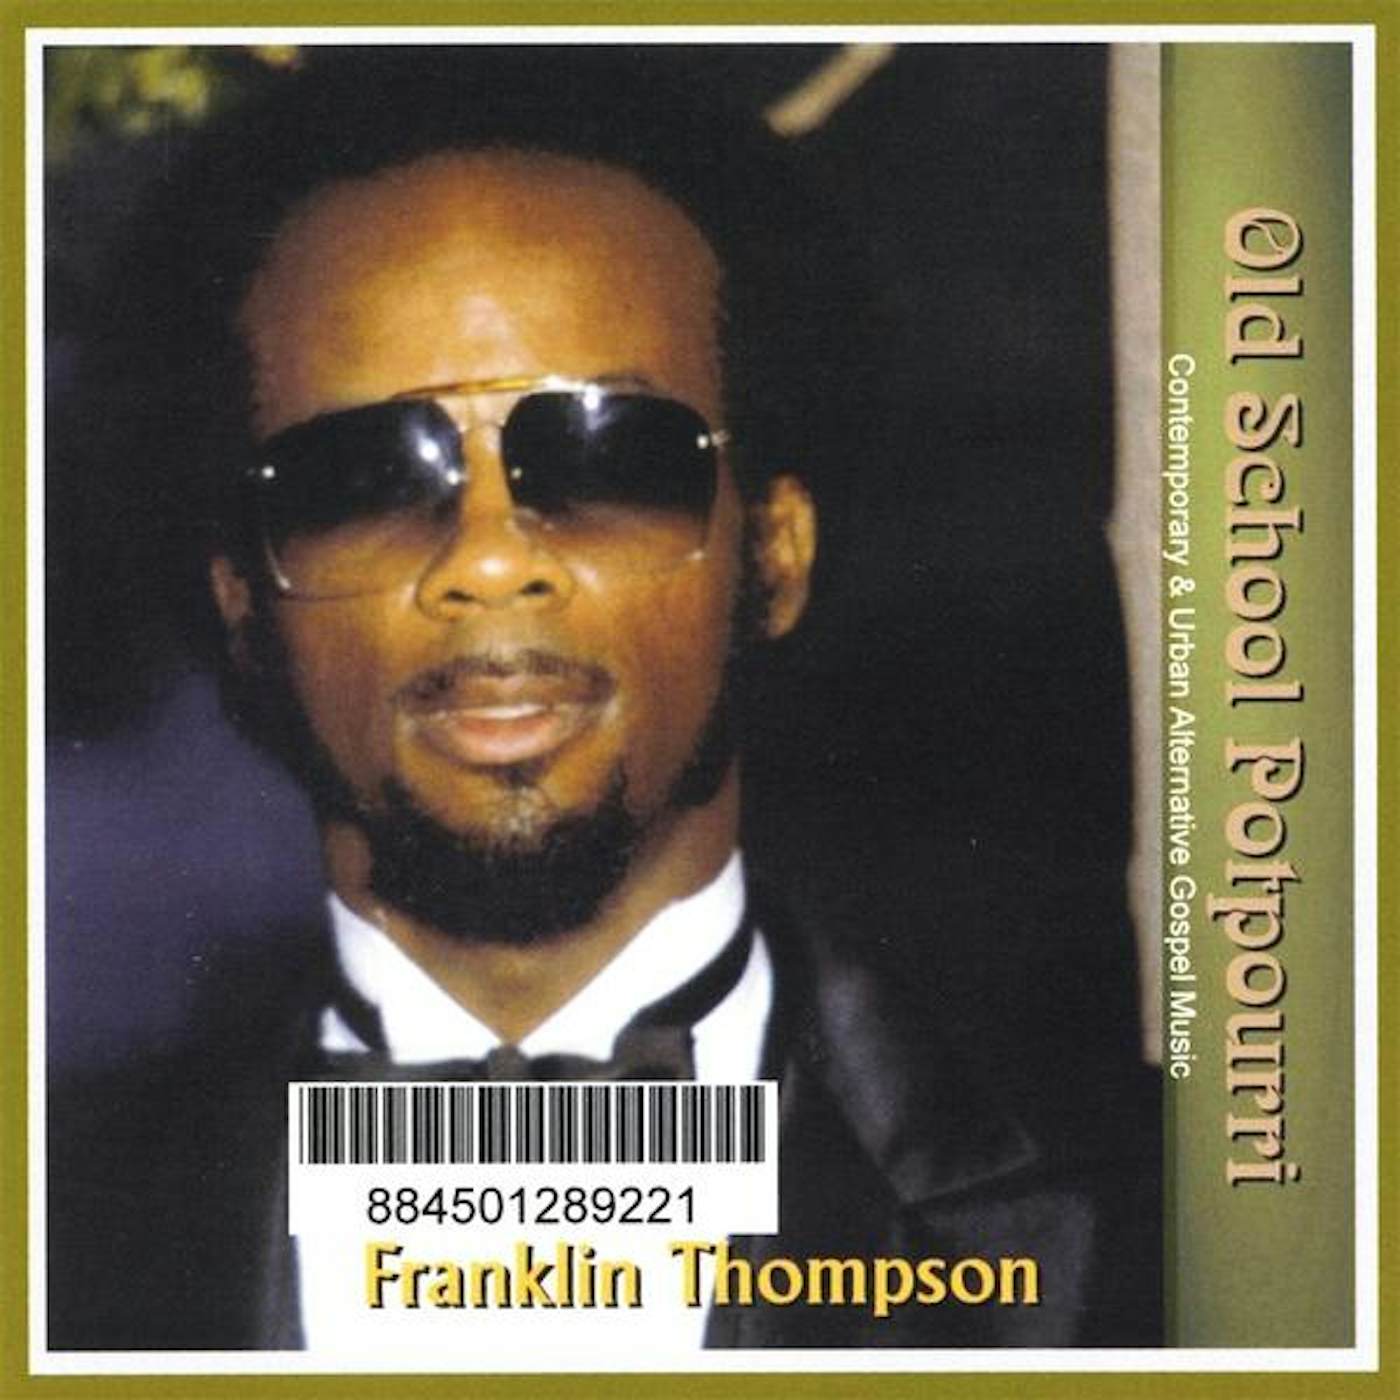 Franklin Thompson OLD SCHOOL POTPOURRI CD